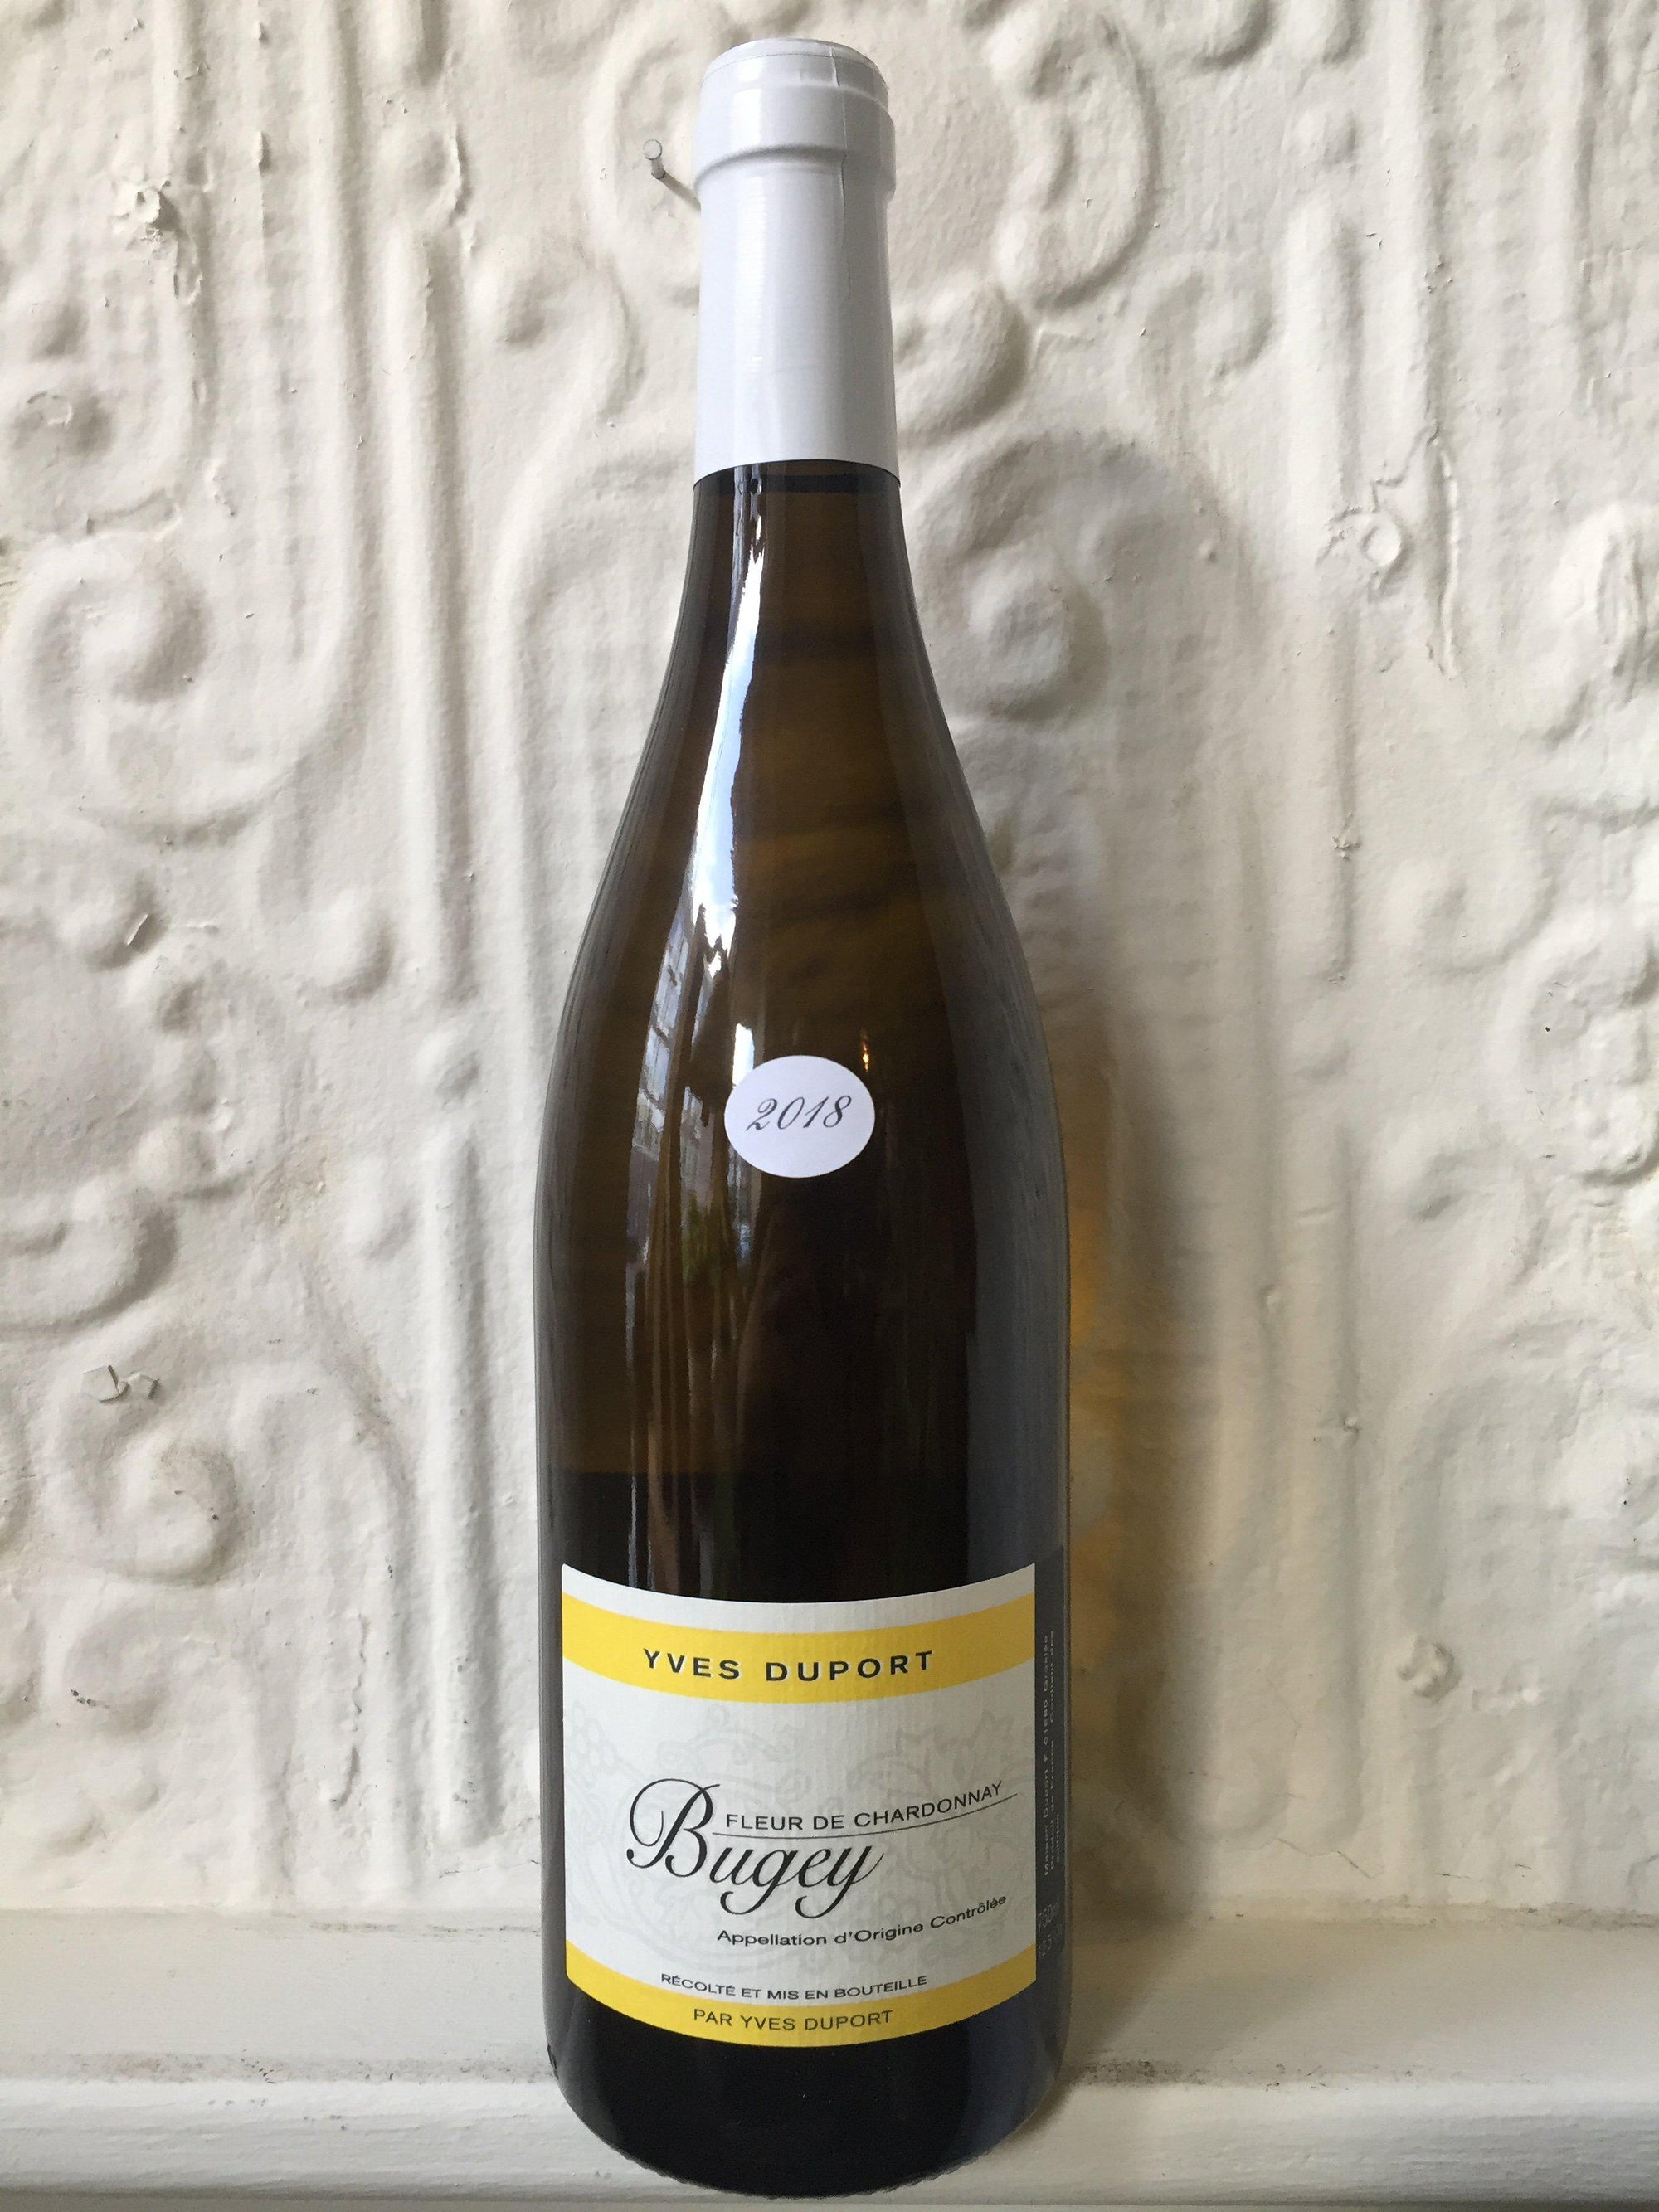 Fleur de Chardonnay, Yves Duport 2018 $16 (Savoy, France)-Wine-Bibber & Bell